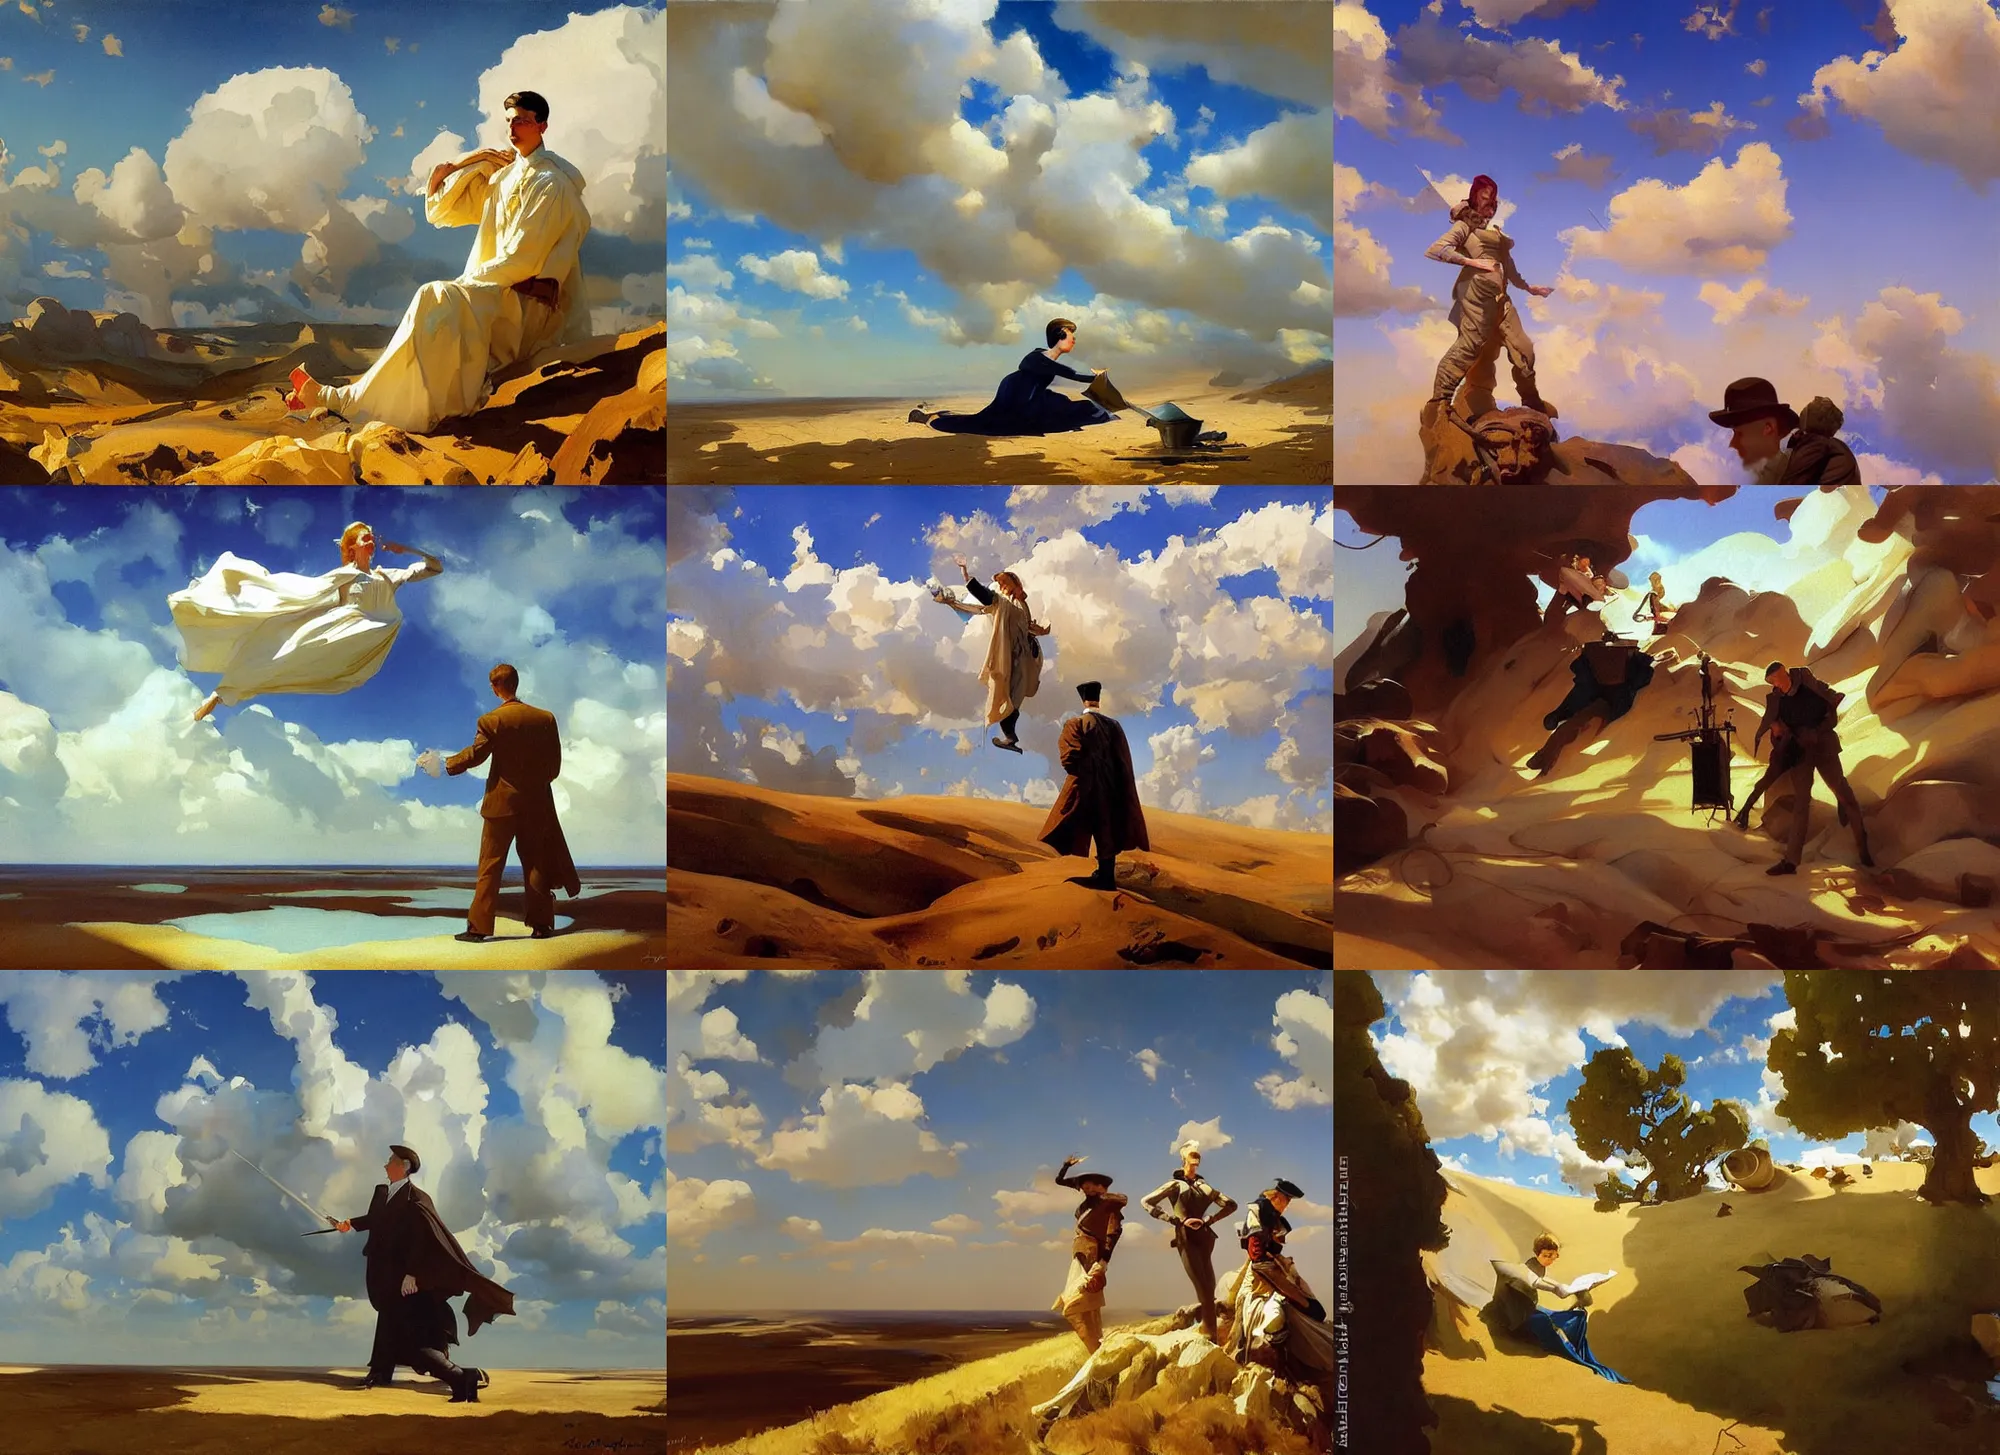 Prompt: painting by sargent and leyendecker and greg hildebrandt, michael whelan, savrasov levitan polenov, studio ghibly style, no figure composition. surrealism fantasy landscape sky image overcast